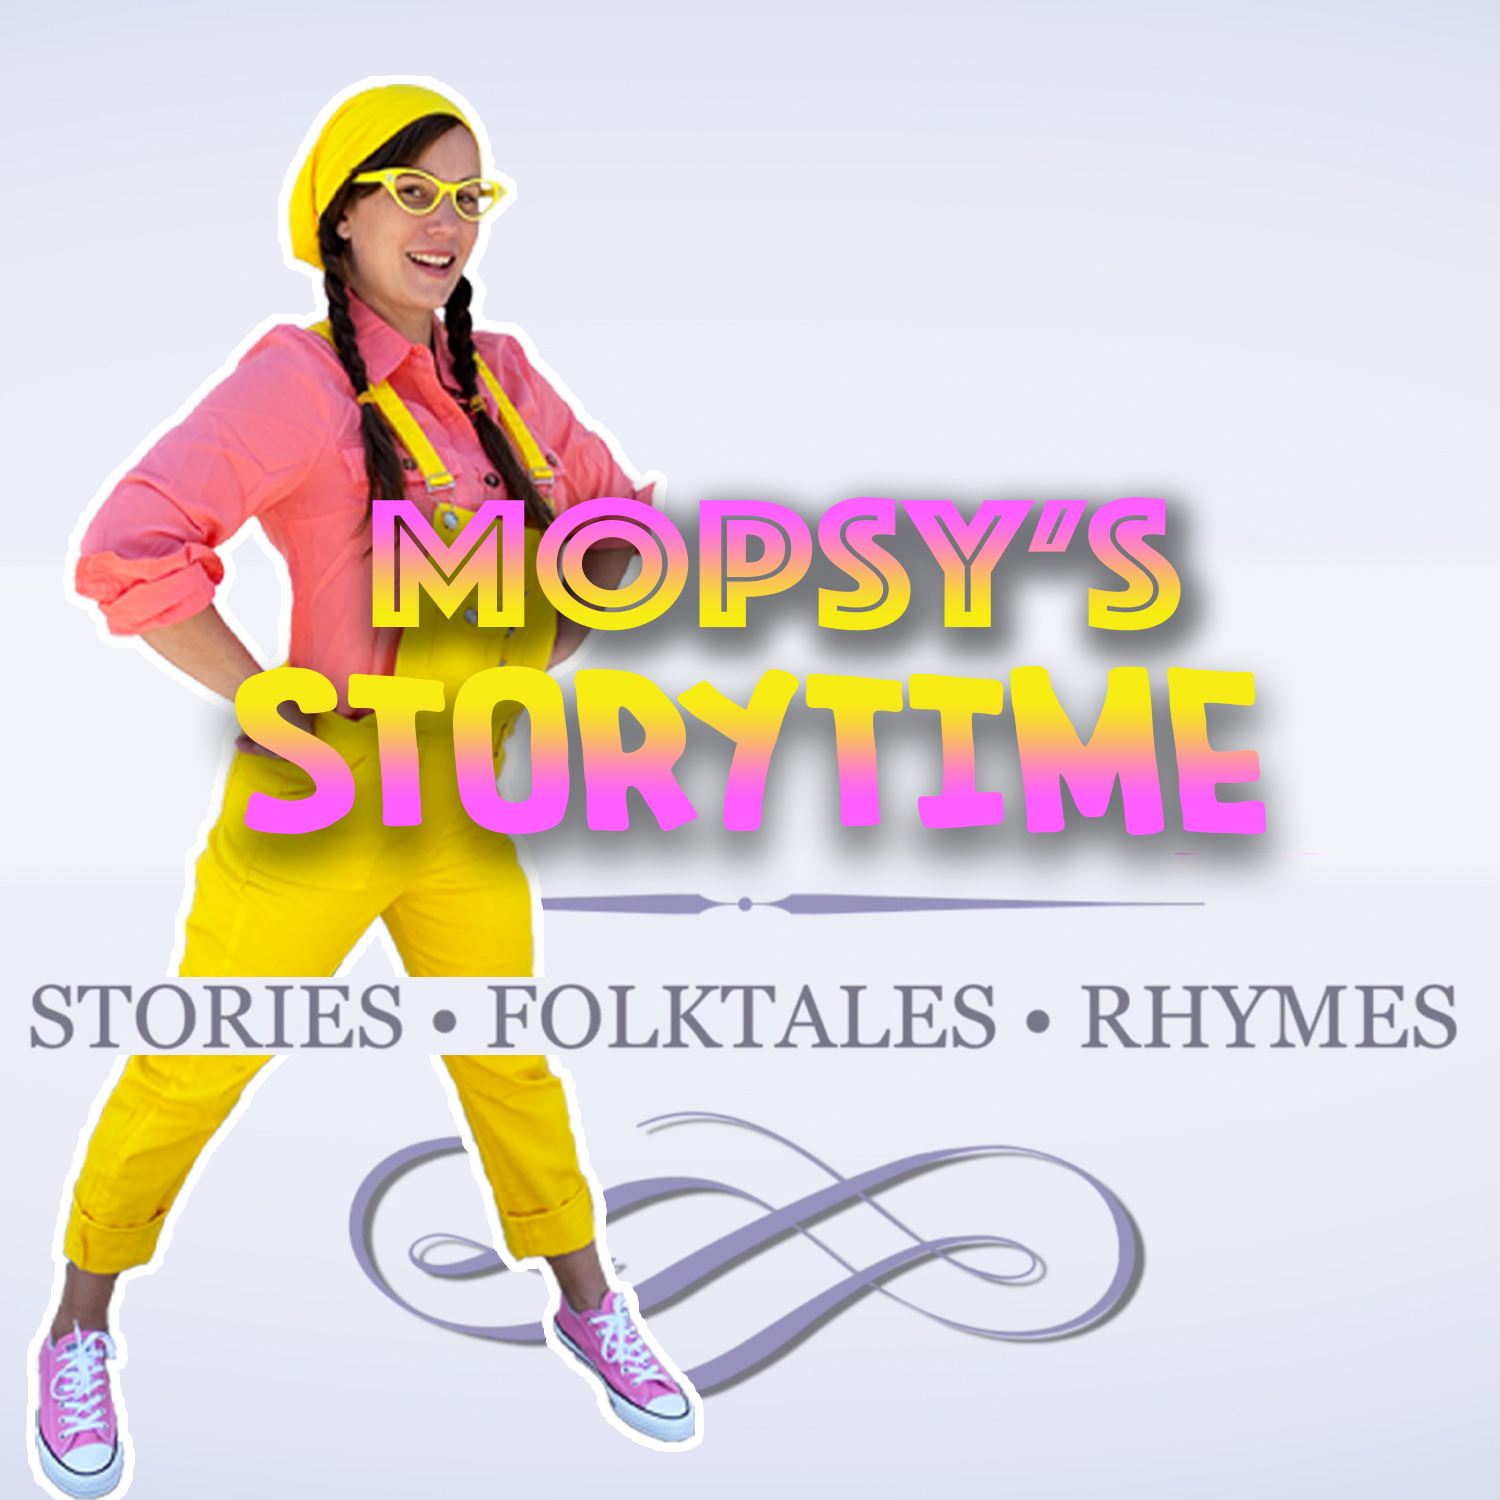 Mopsy's Storytime